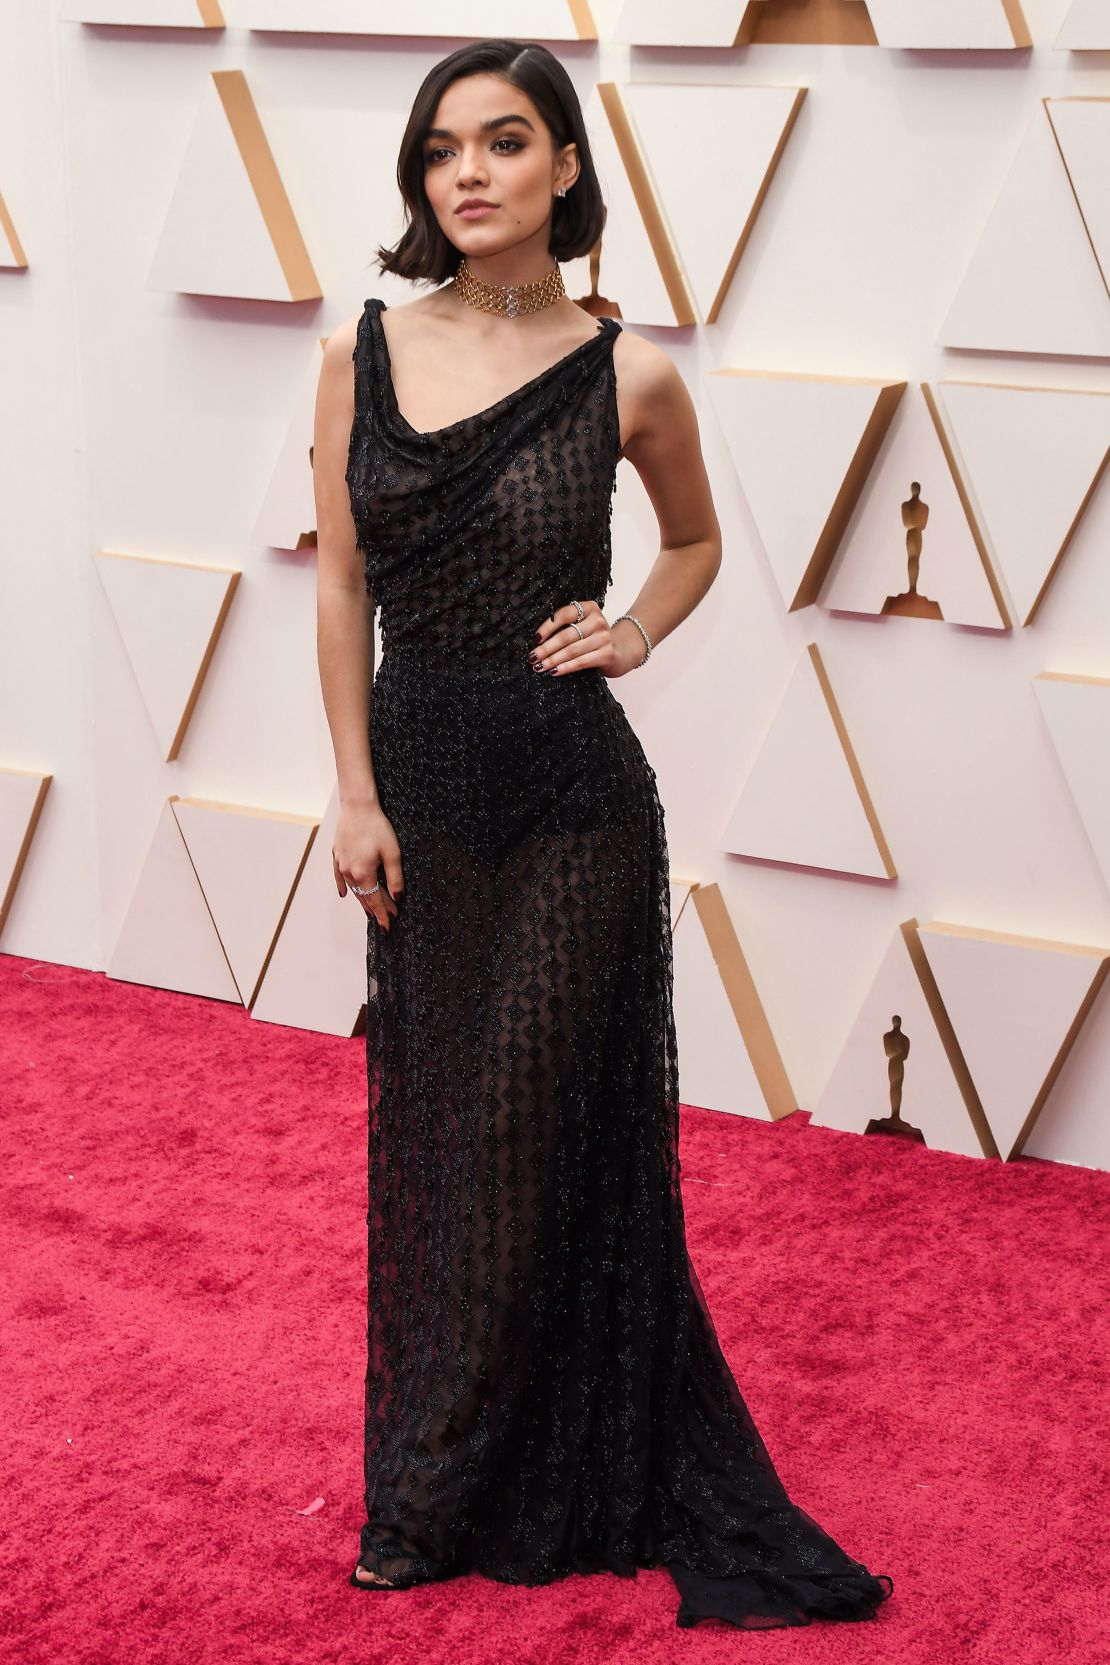 Photos: Red carpet fashion at the Oscars | CNN